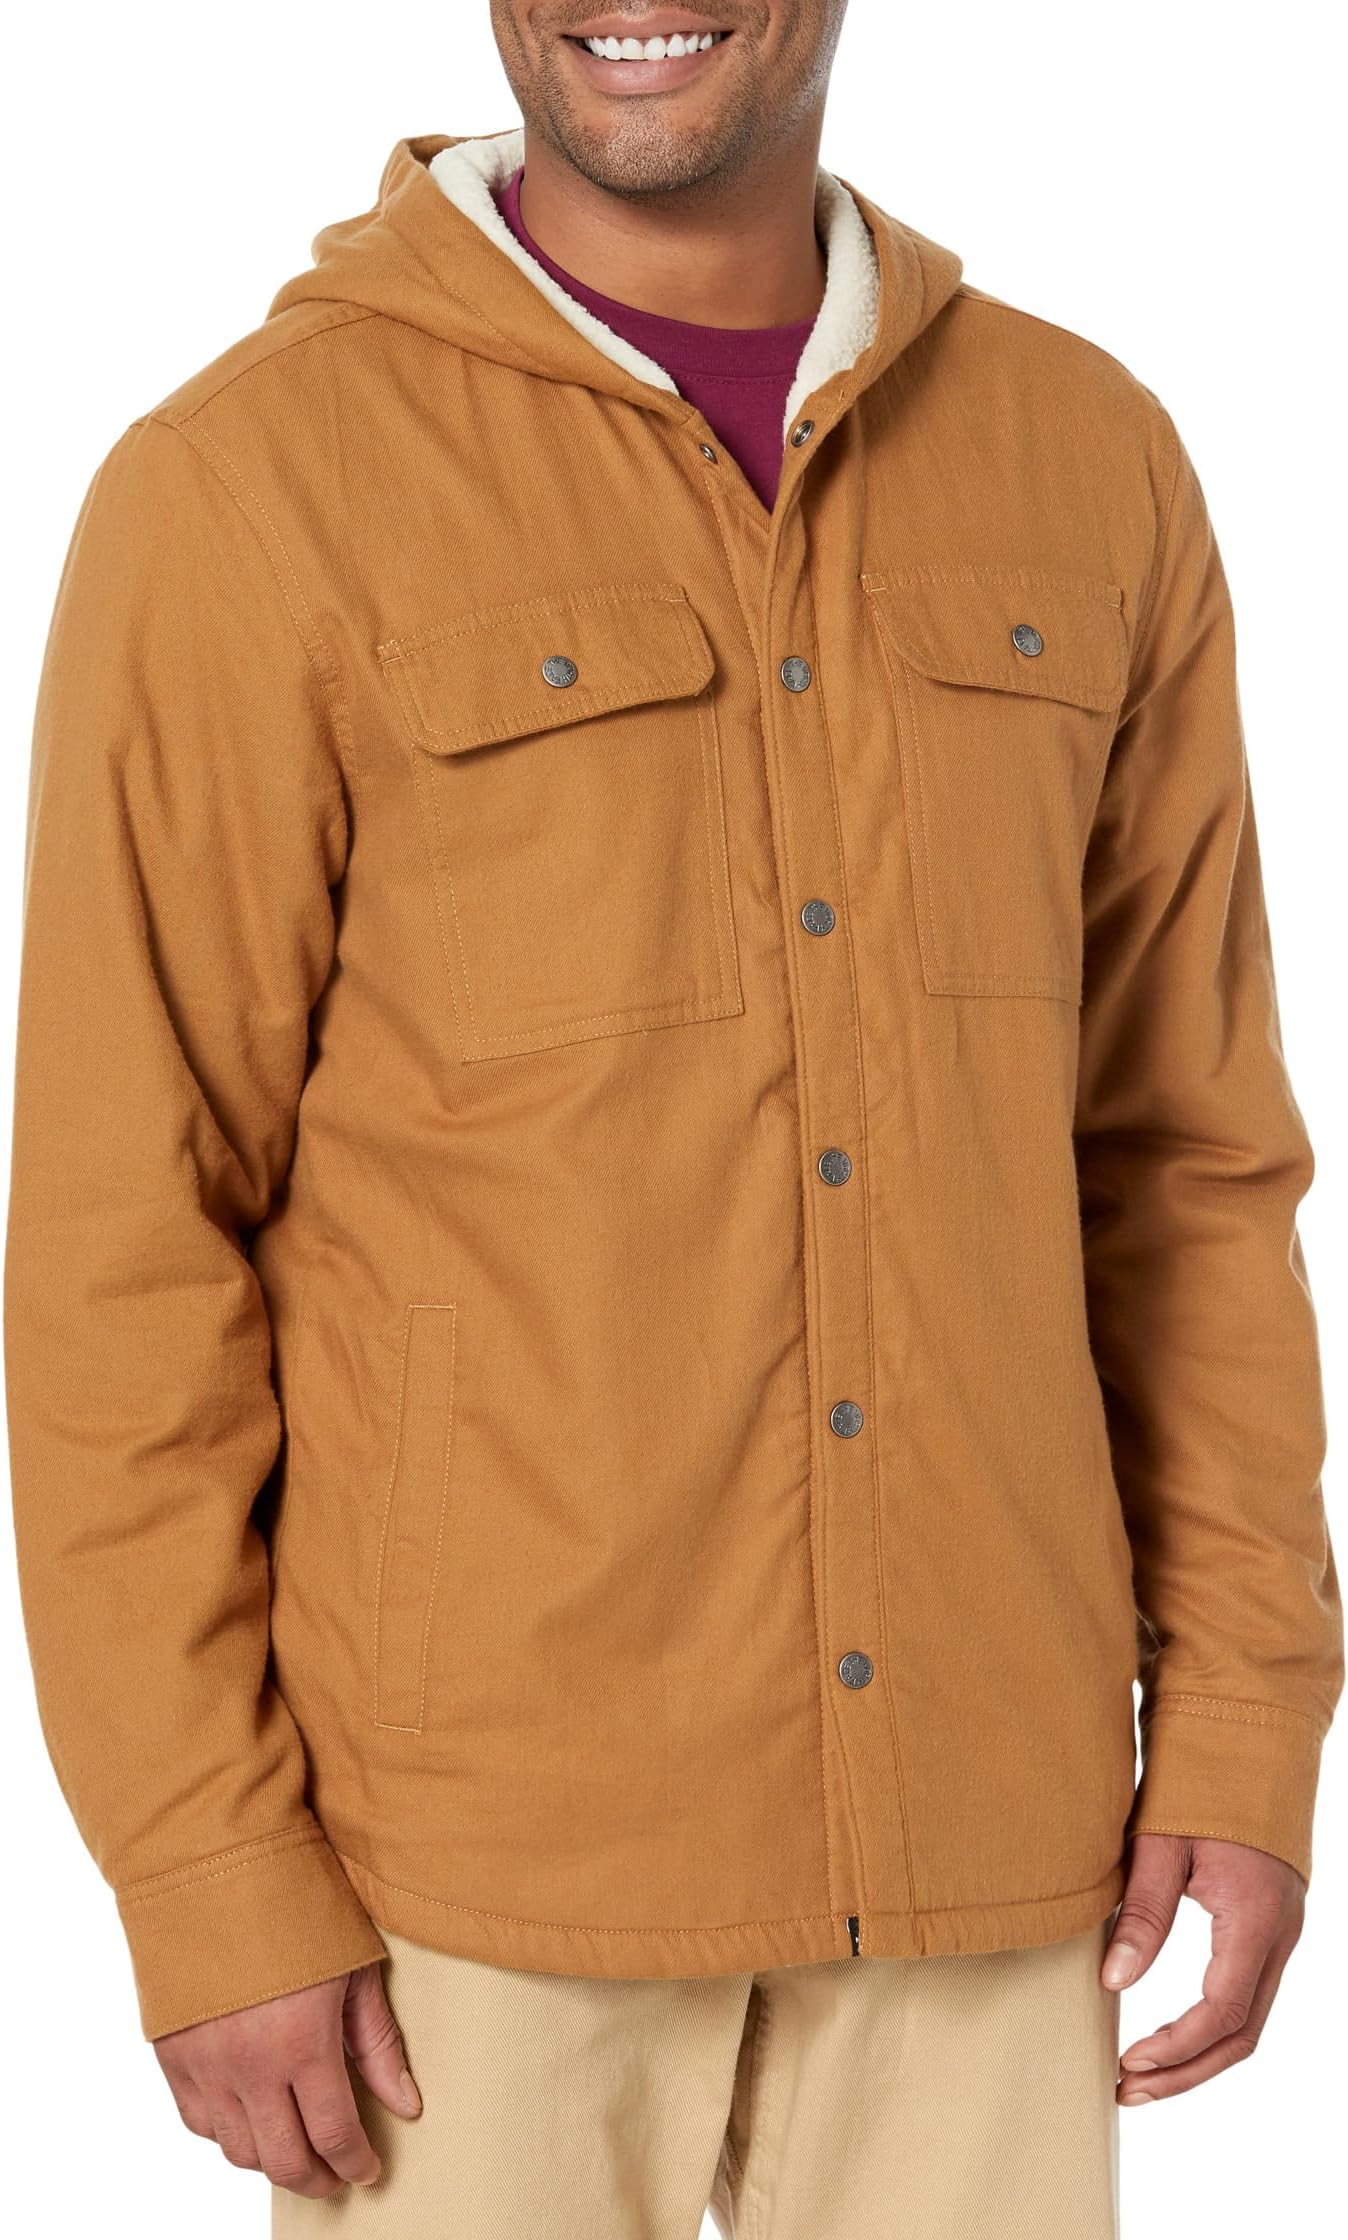 Рубашка в стиле Кэмпшир с капюшоном The North Face, цвет Utility Brown шорты из рипстопа 7 дюймов класс v the north face цвет utility brown